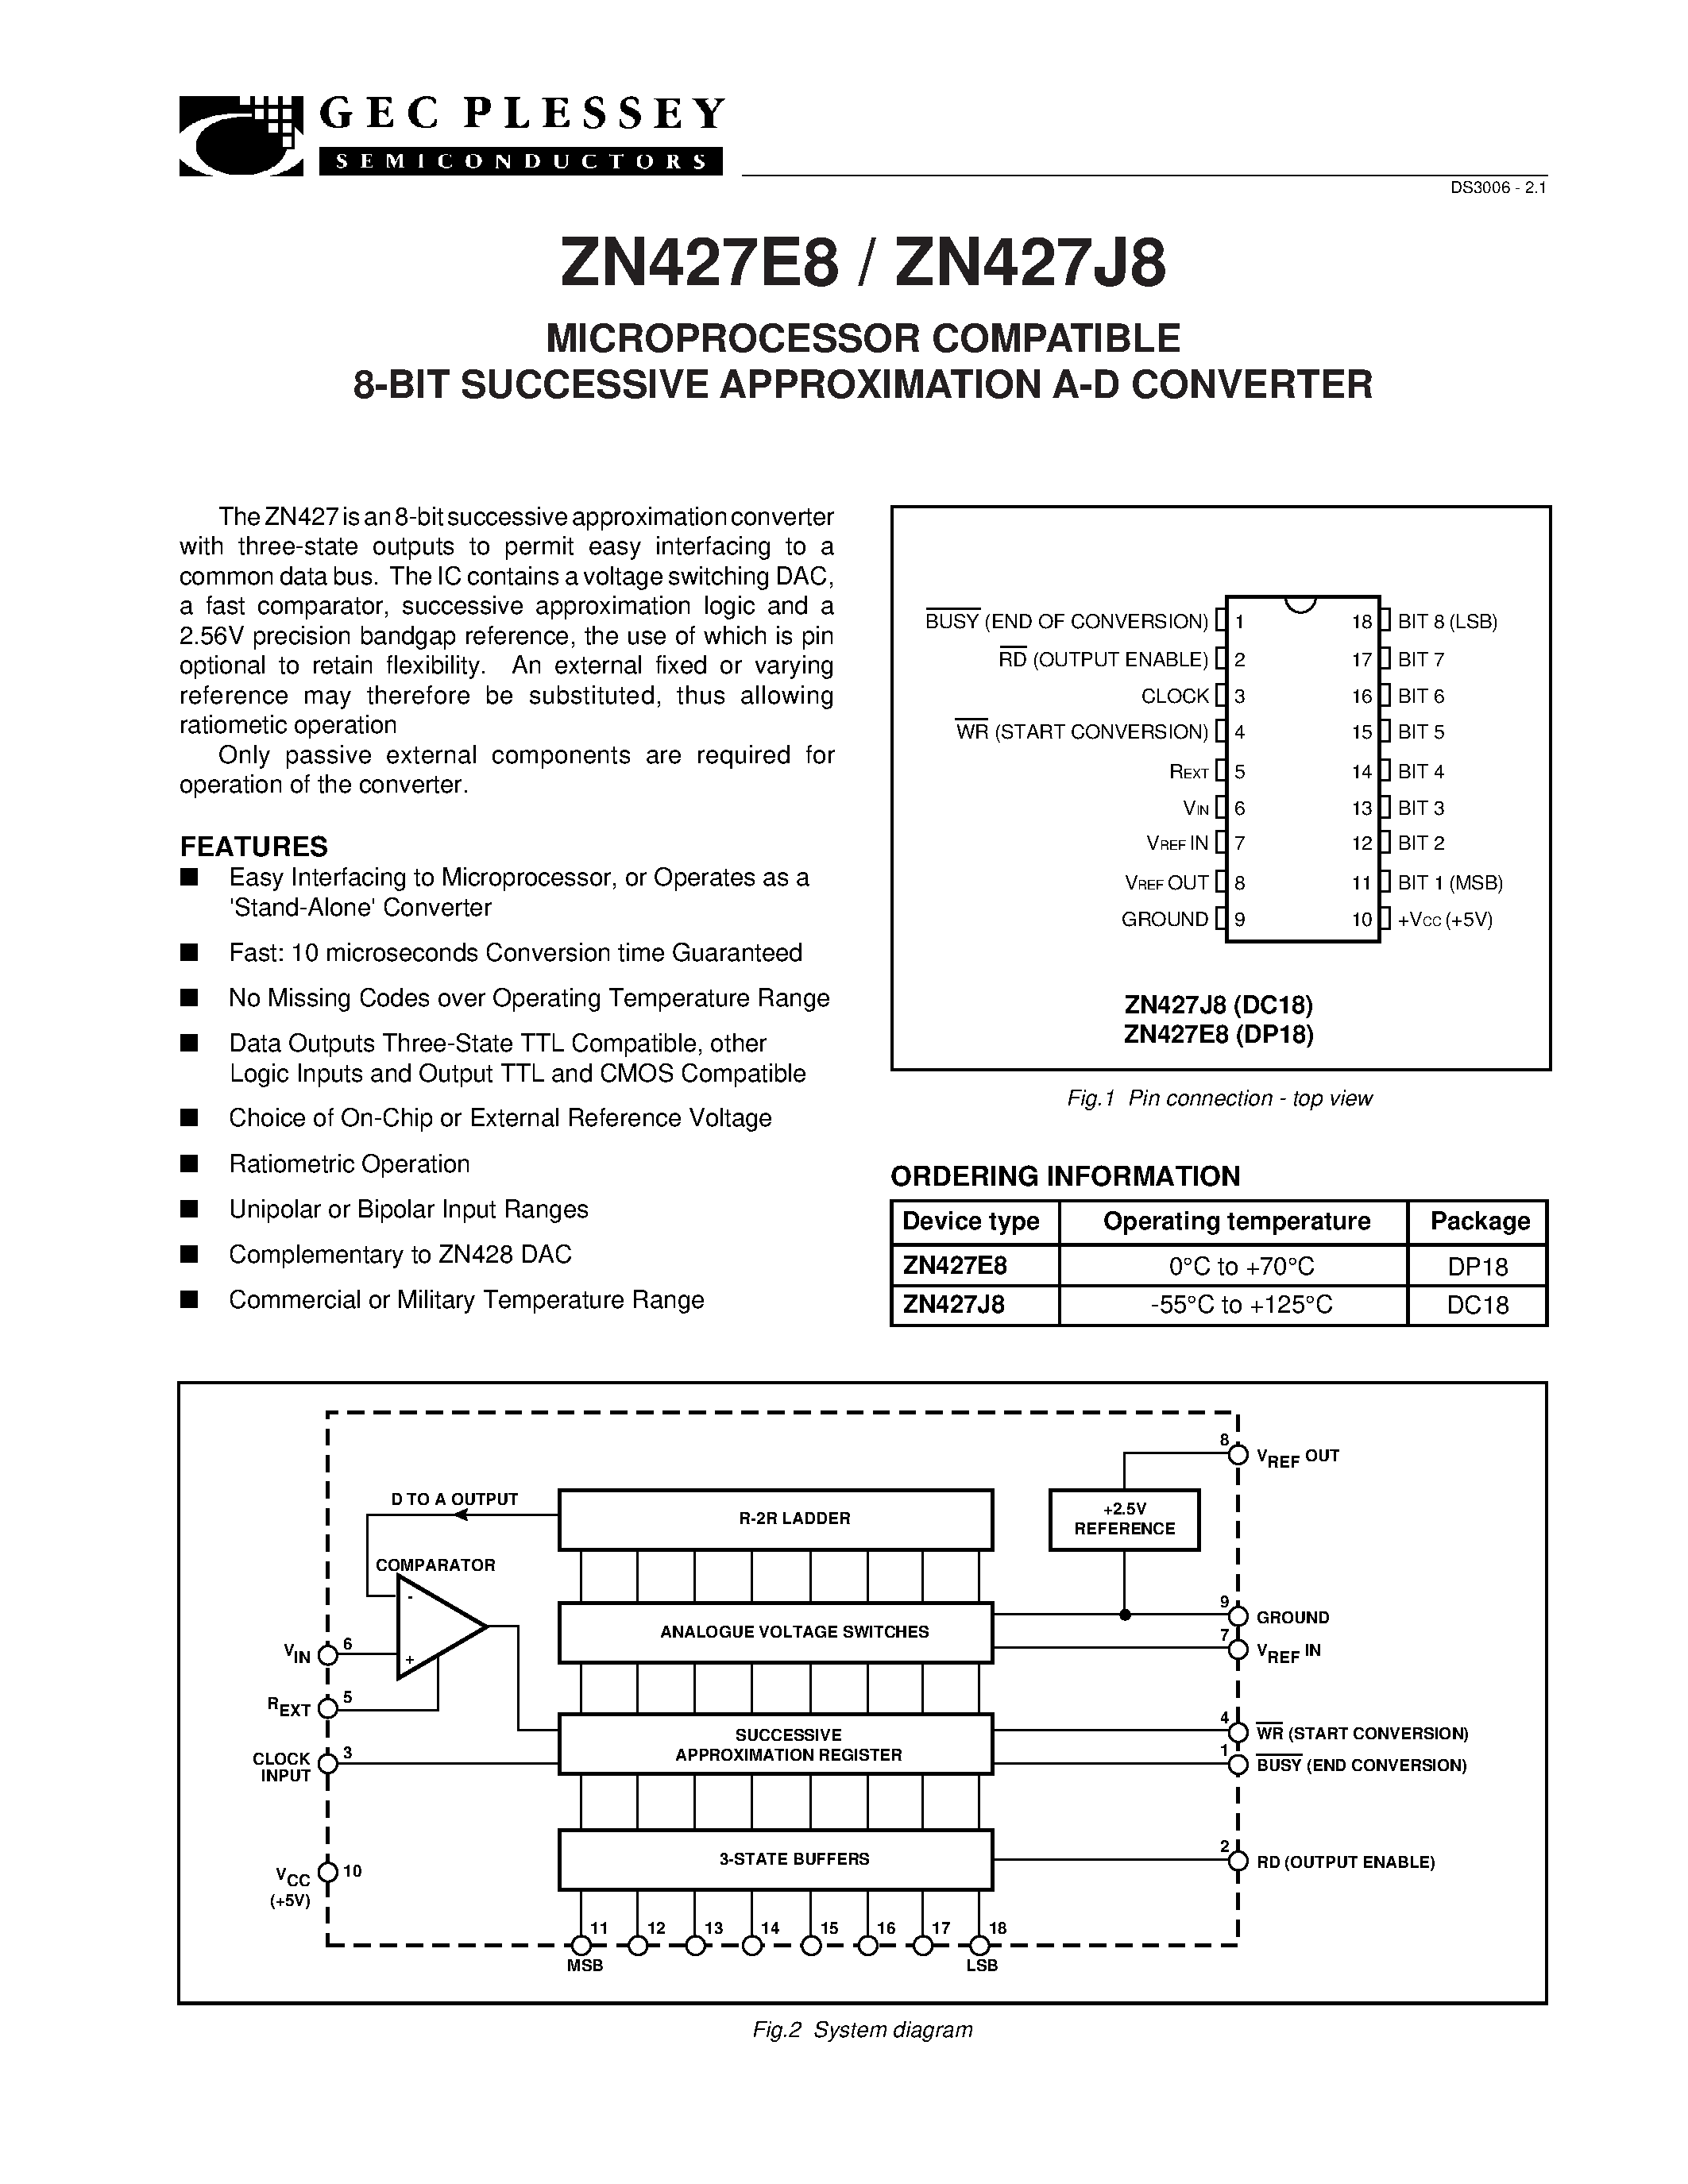 Datasheet ZN427E8 - MICROPROCESSOR COMPATIBLE 8-BIT SUCCESSIVE APPROXIMATION A-D CONVERTER page 2